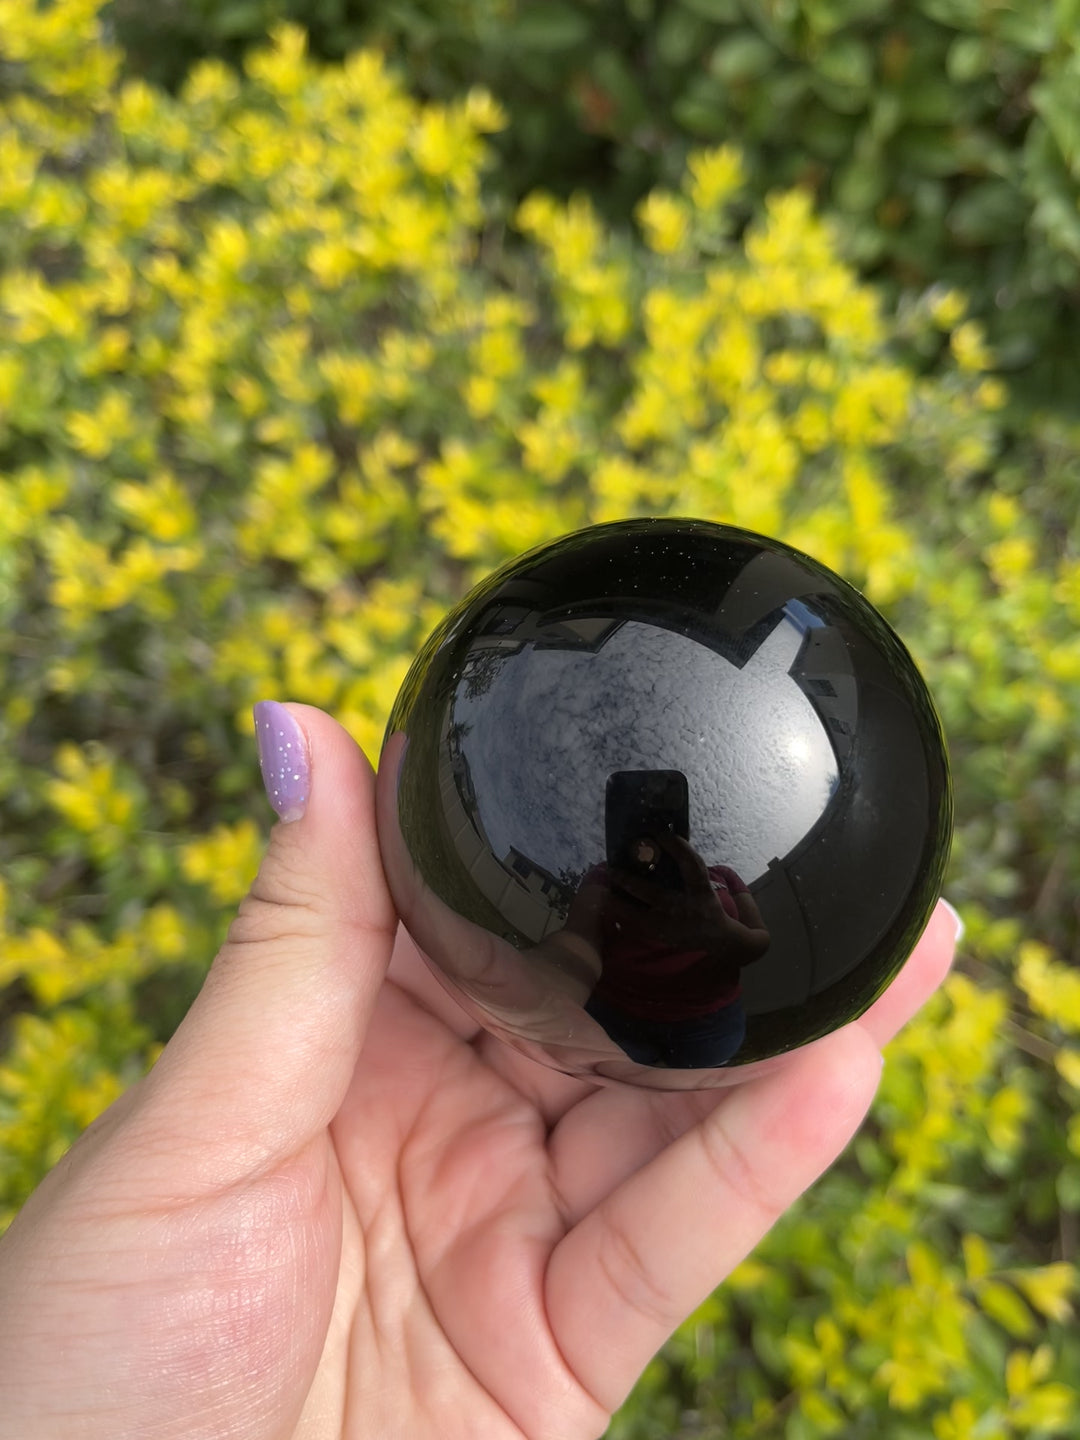 Black Obsidian Sphere #3